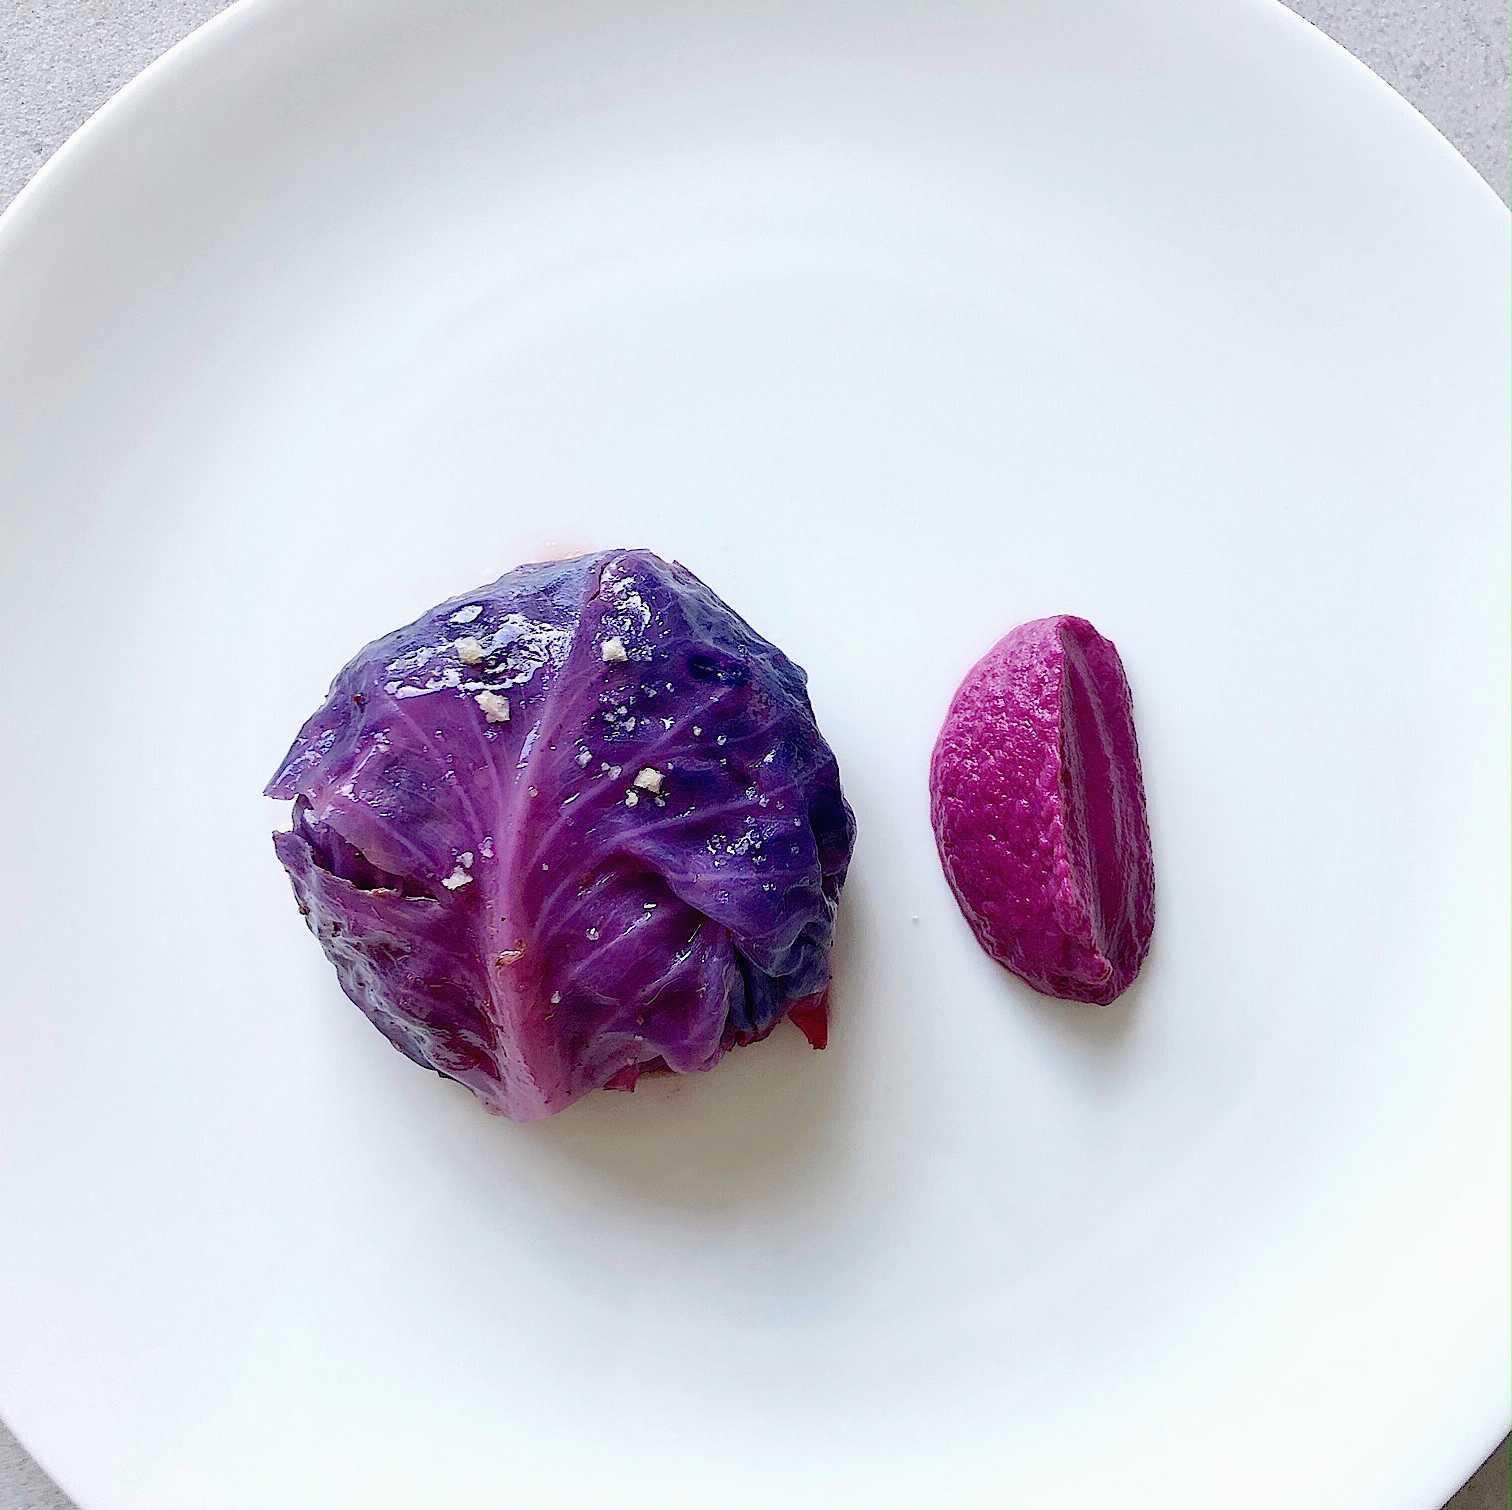 Stuffed Cabbage recipe with truffle